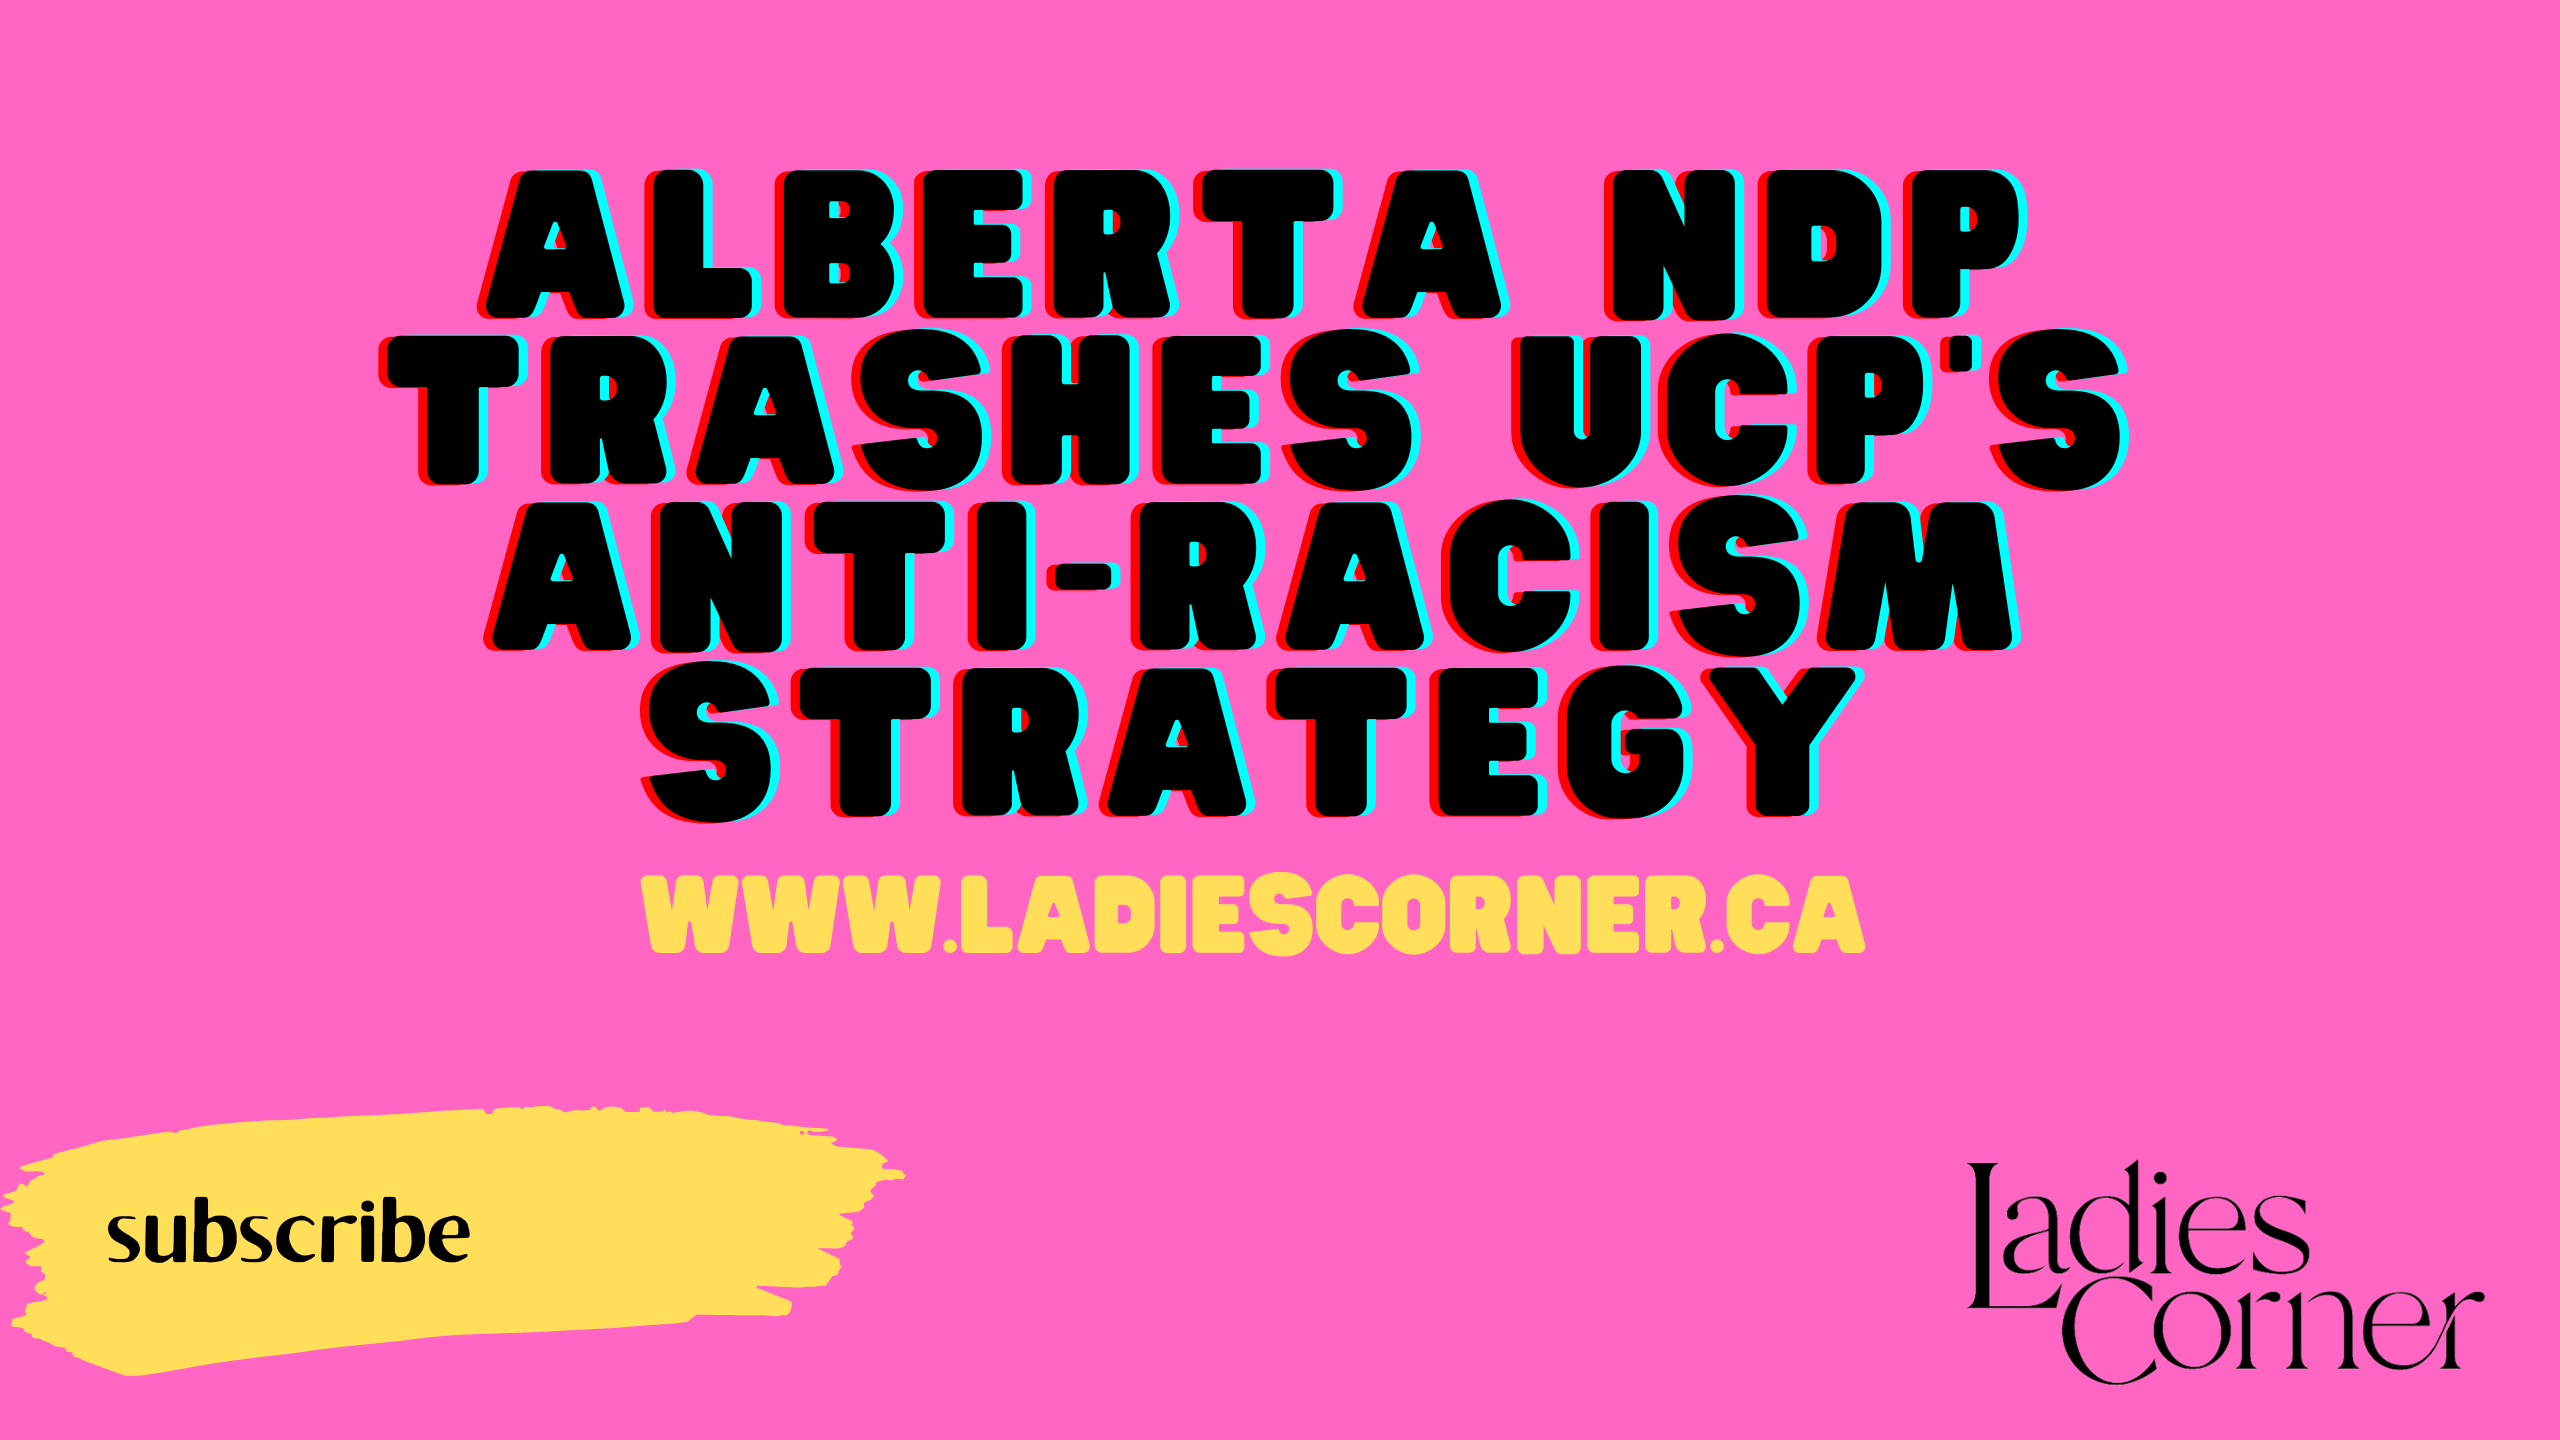 Alberta NDP thrashes UCP's Anti-Racism Strategy.